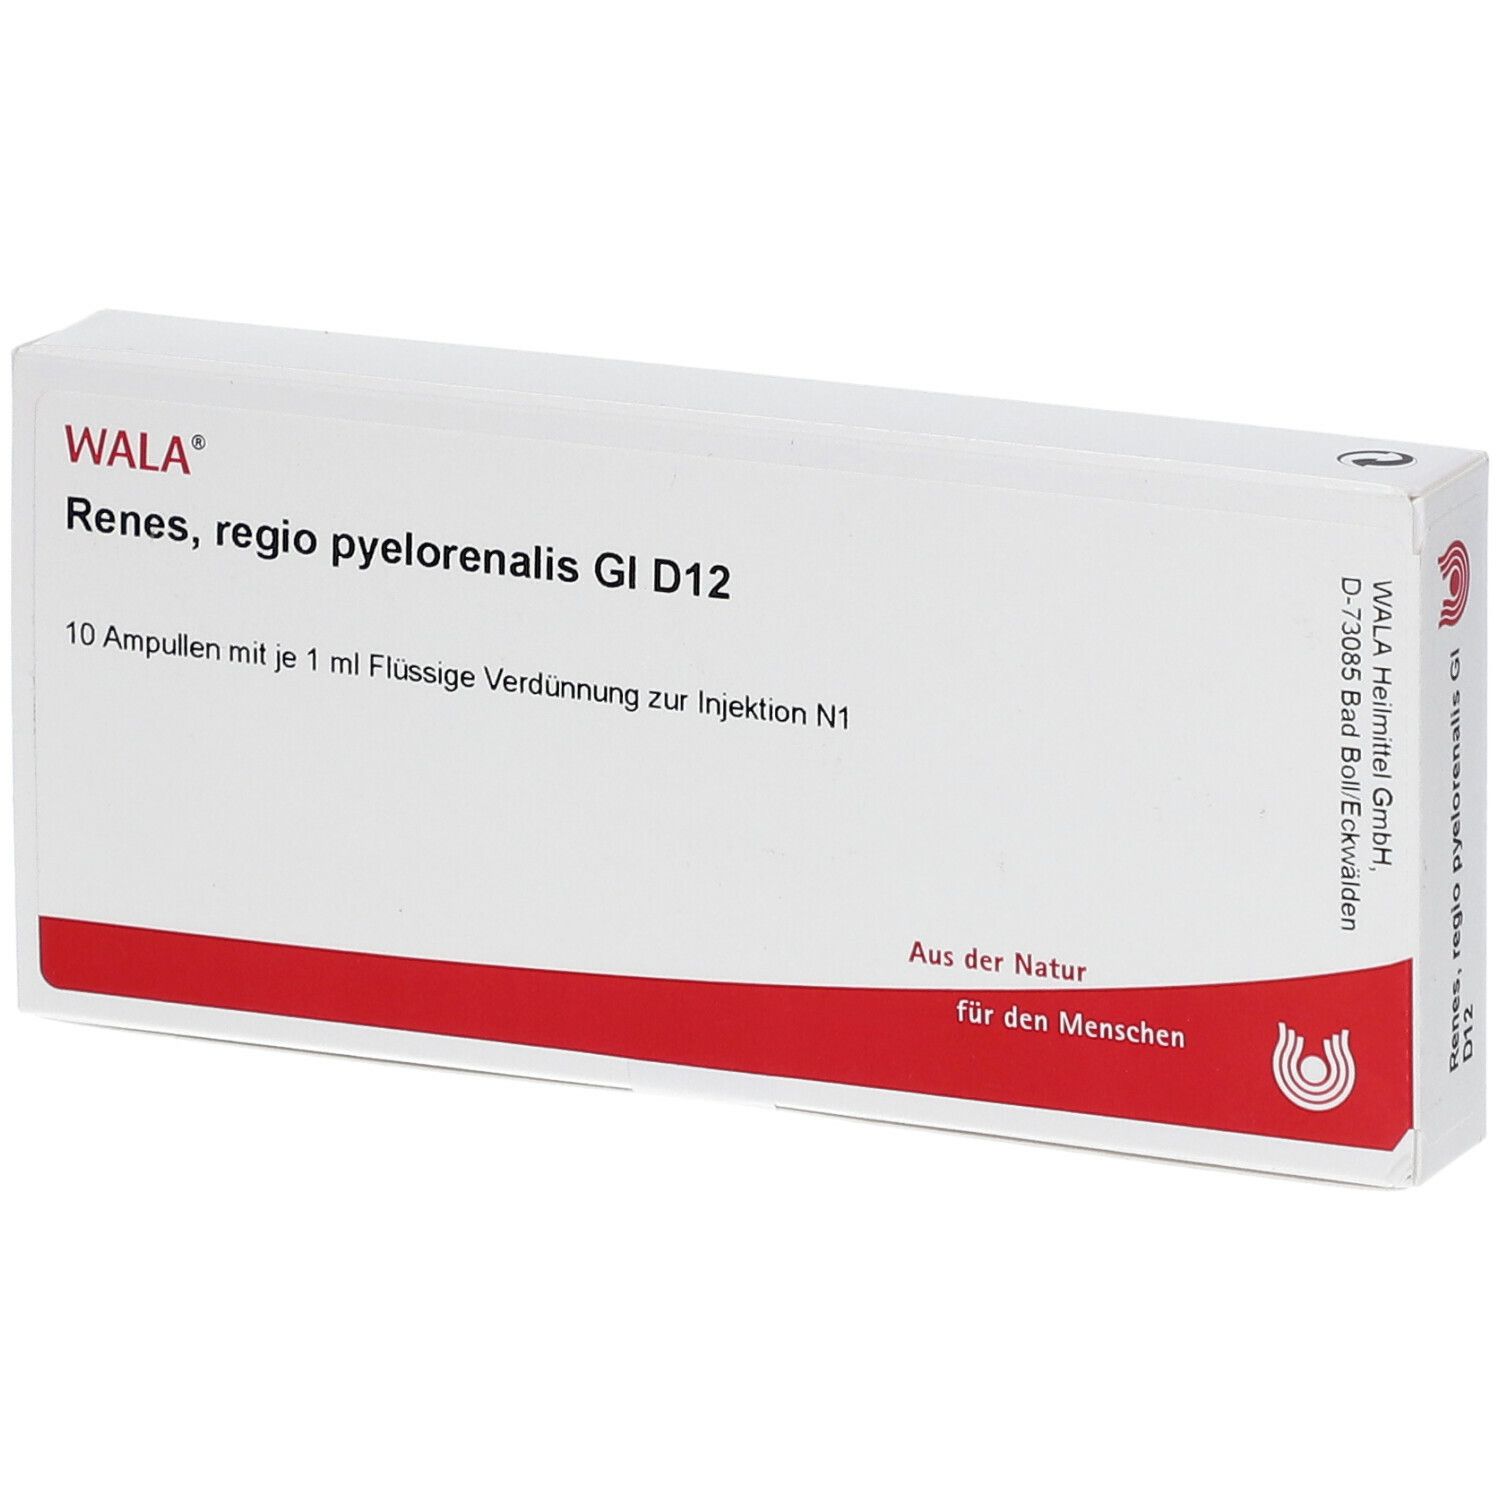 Wala® Renes regio pyelorenalis Gl D 12